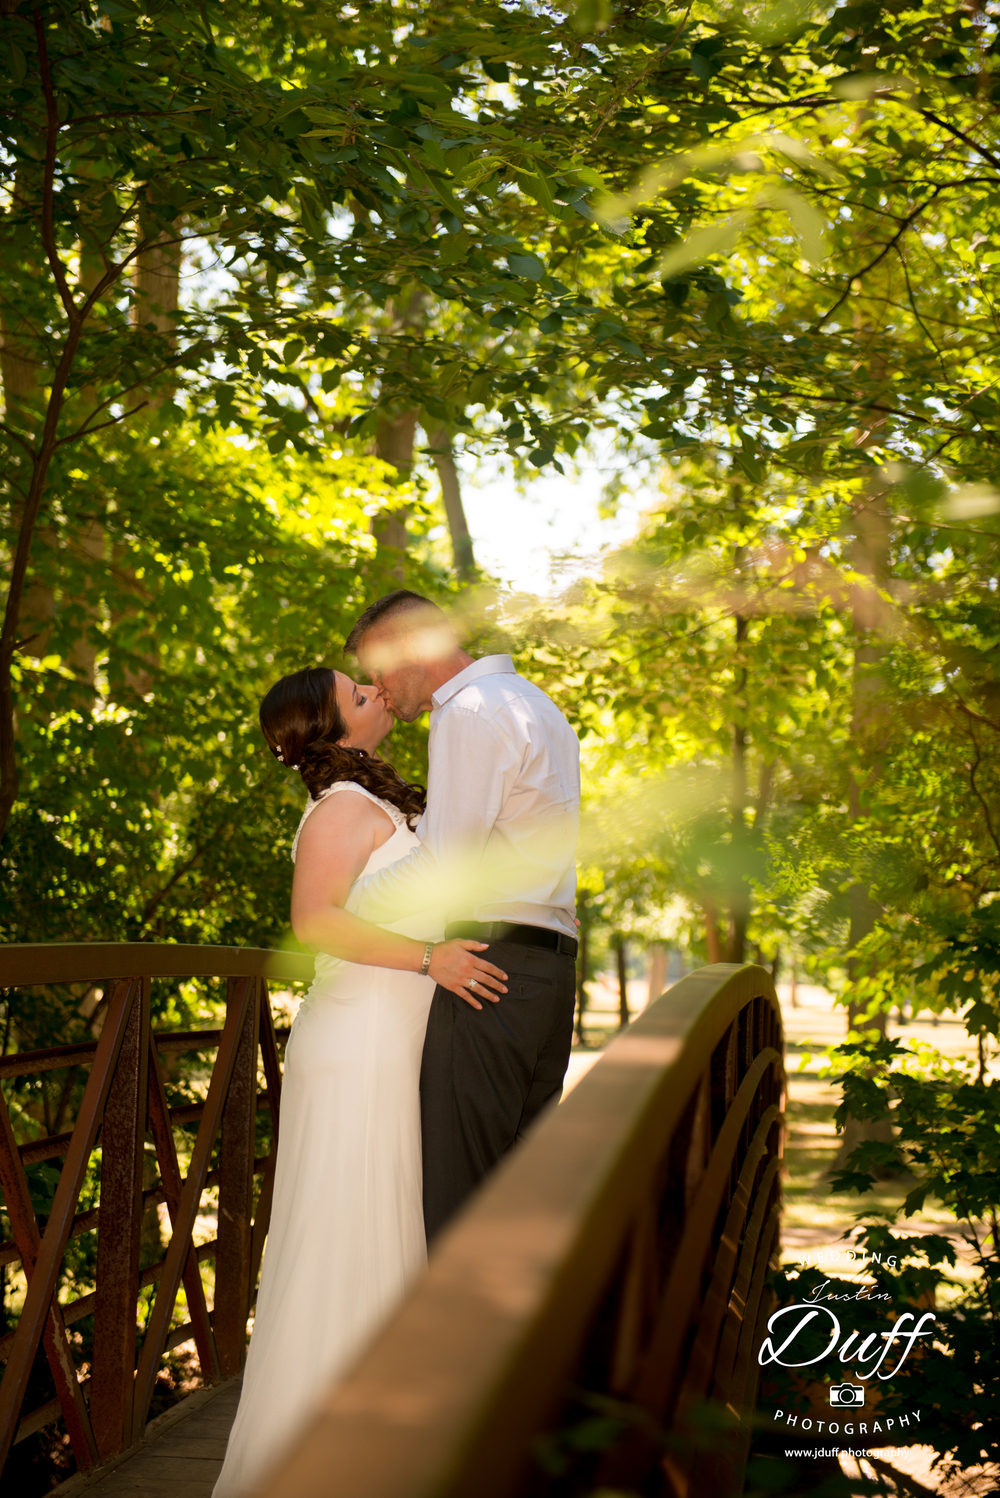  Firefighter Park Wedding - Troy MI wedding photographer. bride and groom kissing on a bridge voyeur.&nbsp; 